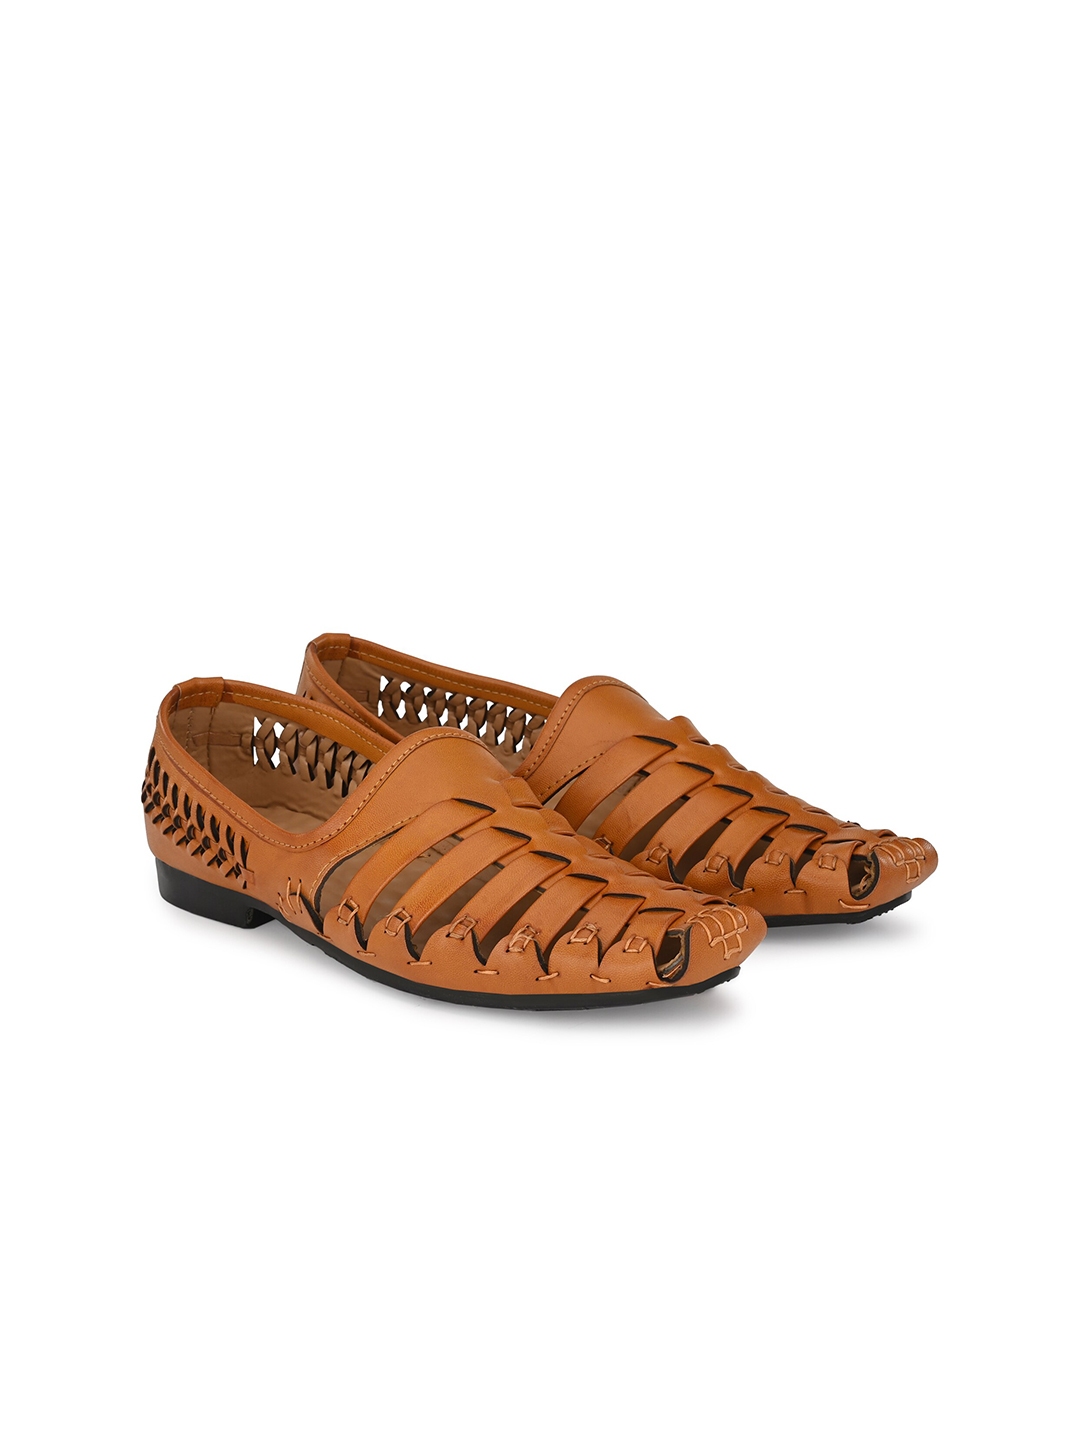 Buy Absolutee Shoes Men Tan Brown Fisherman Sandals - Sandals for Men ...